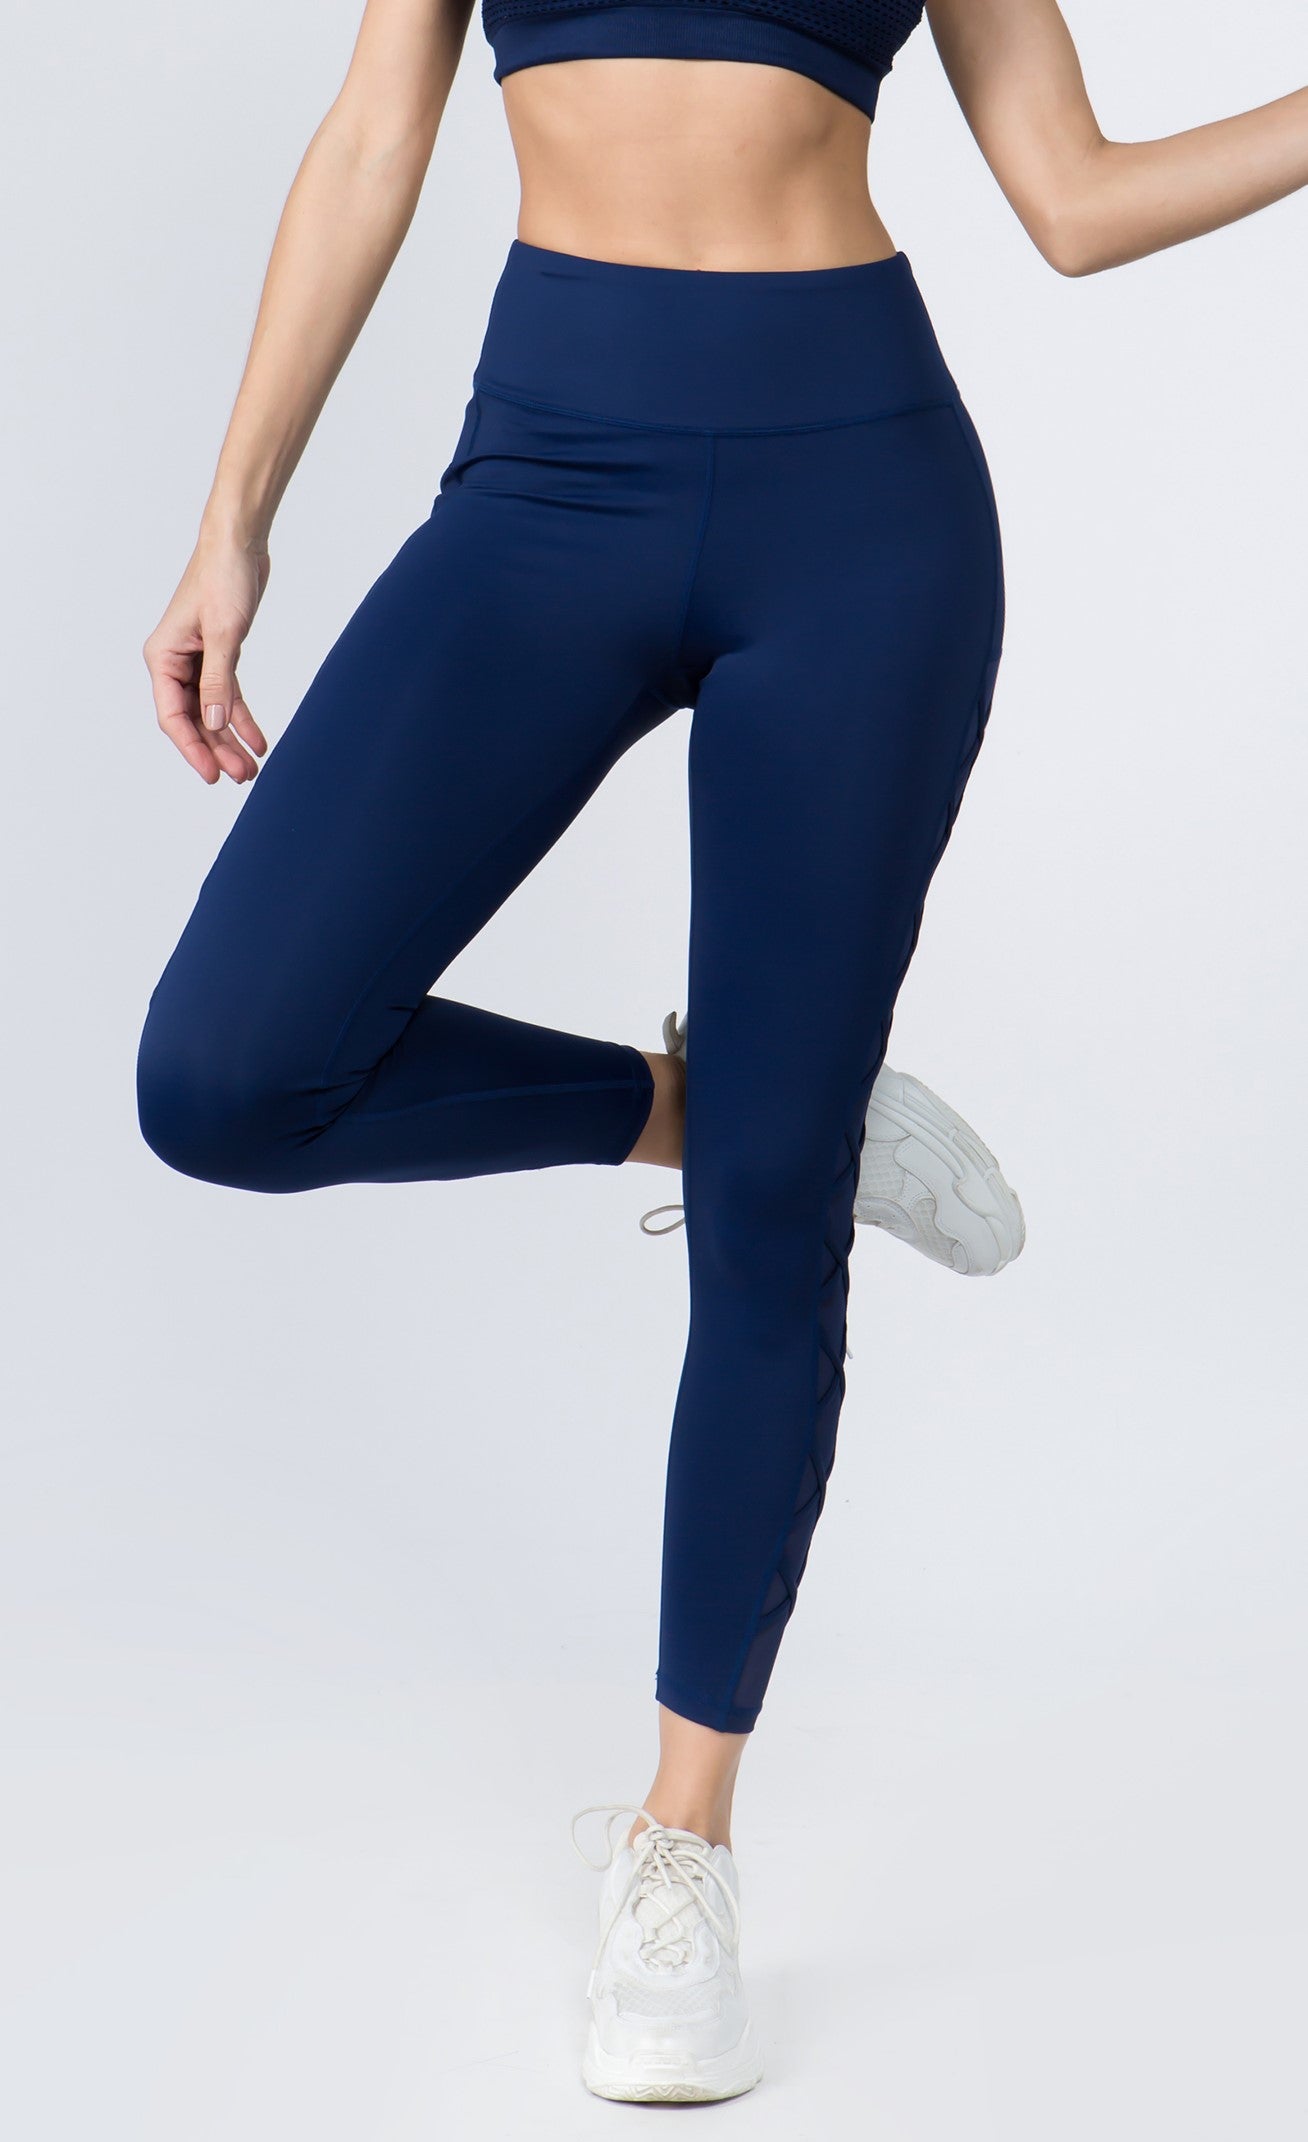 Blue Magic workout leggings – Ultimate Curves